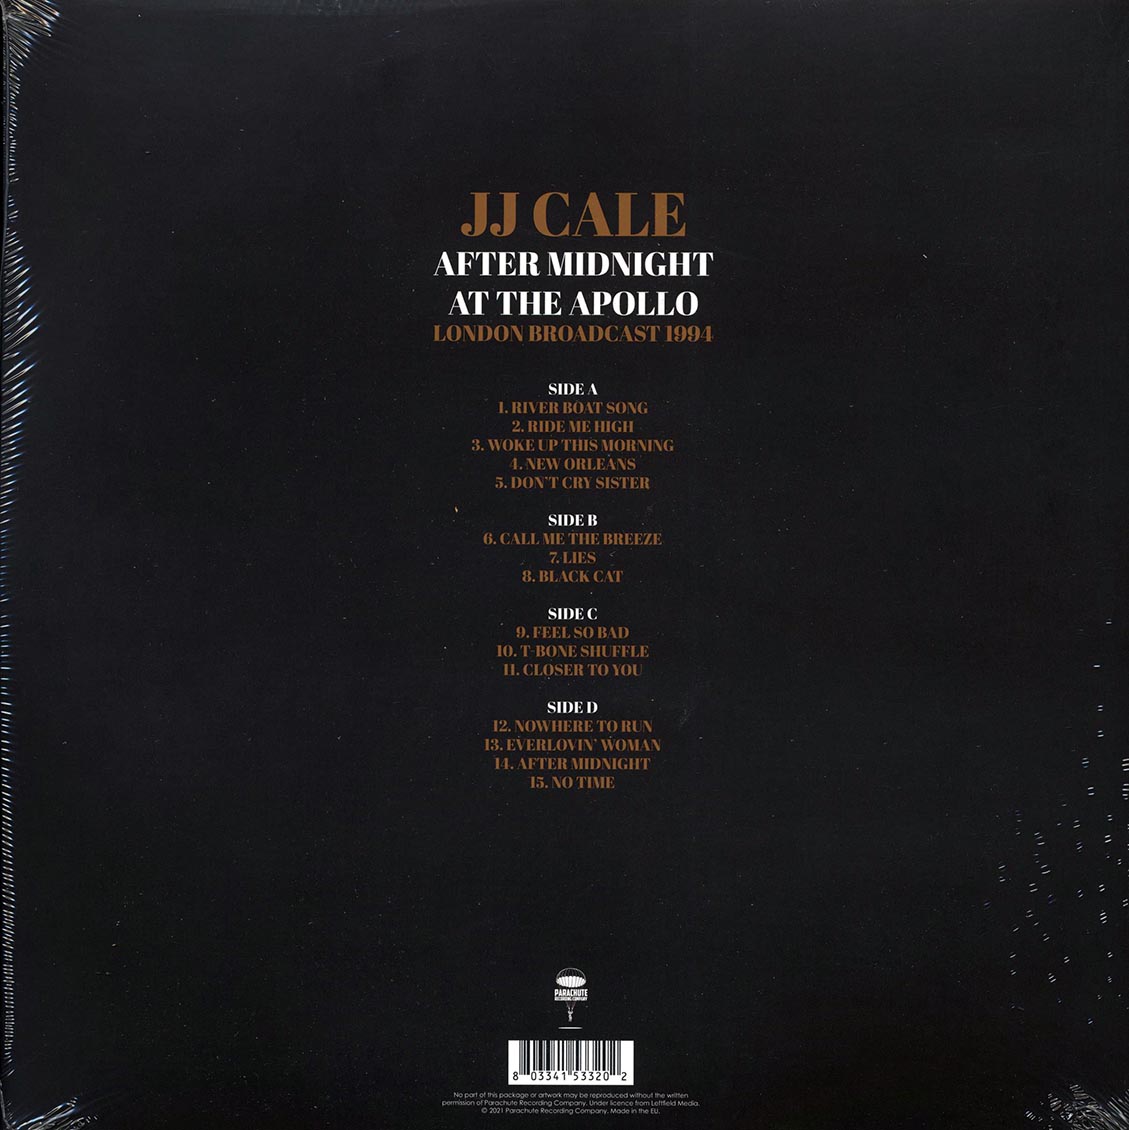 JJ Cale - After Midnight At The Apollo: London Broadcast 1994 (2xLP) - Vinyl LP, LP